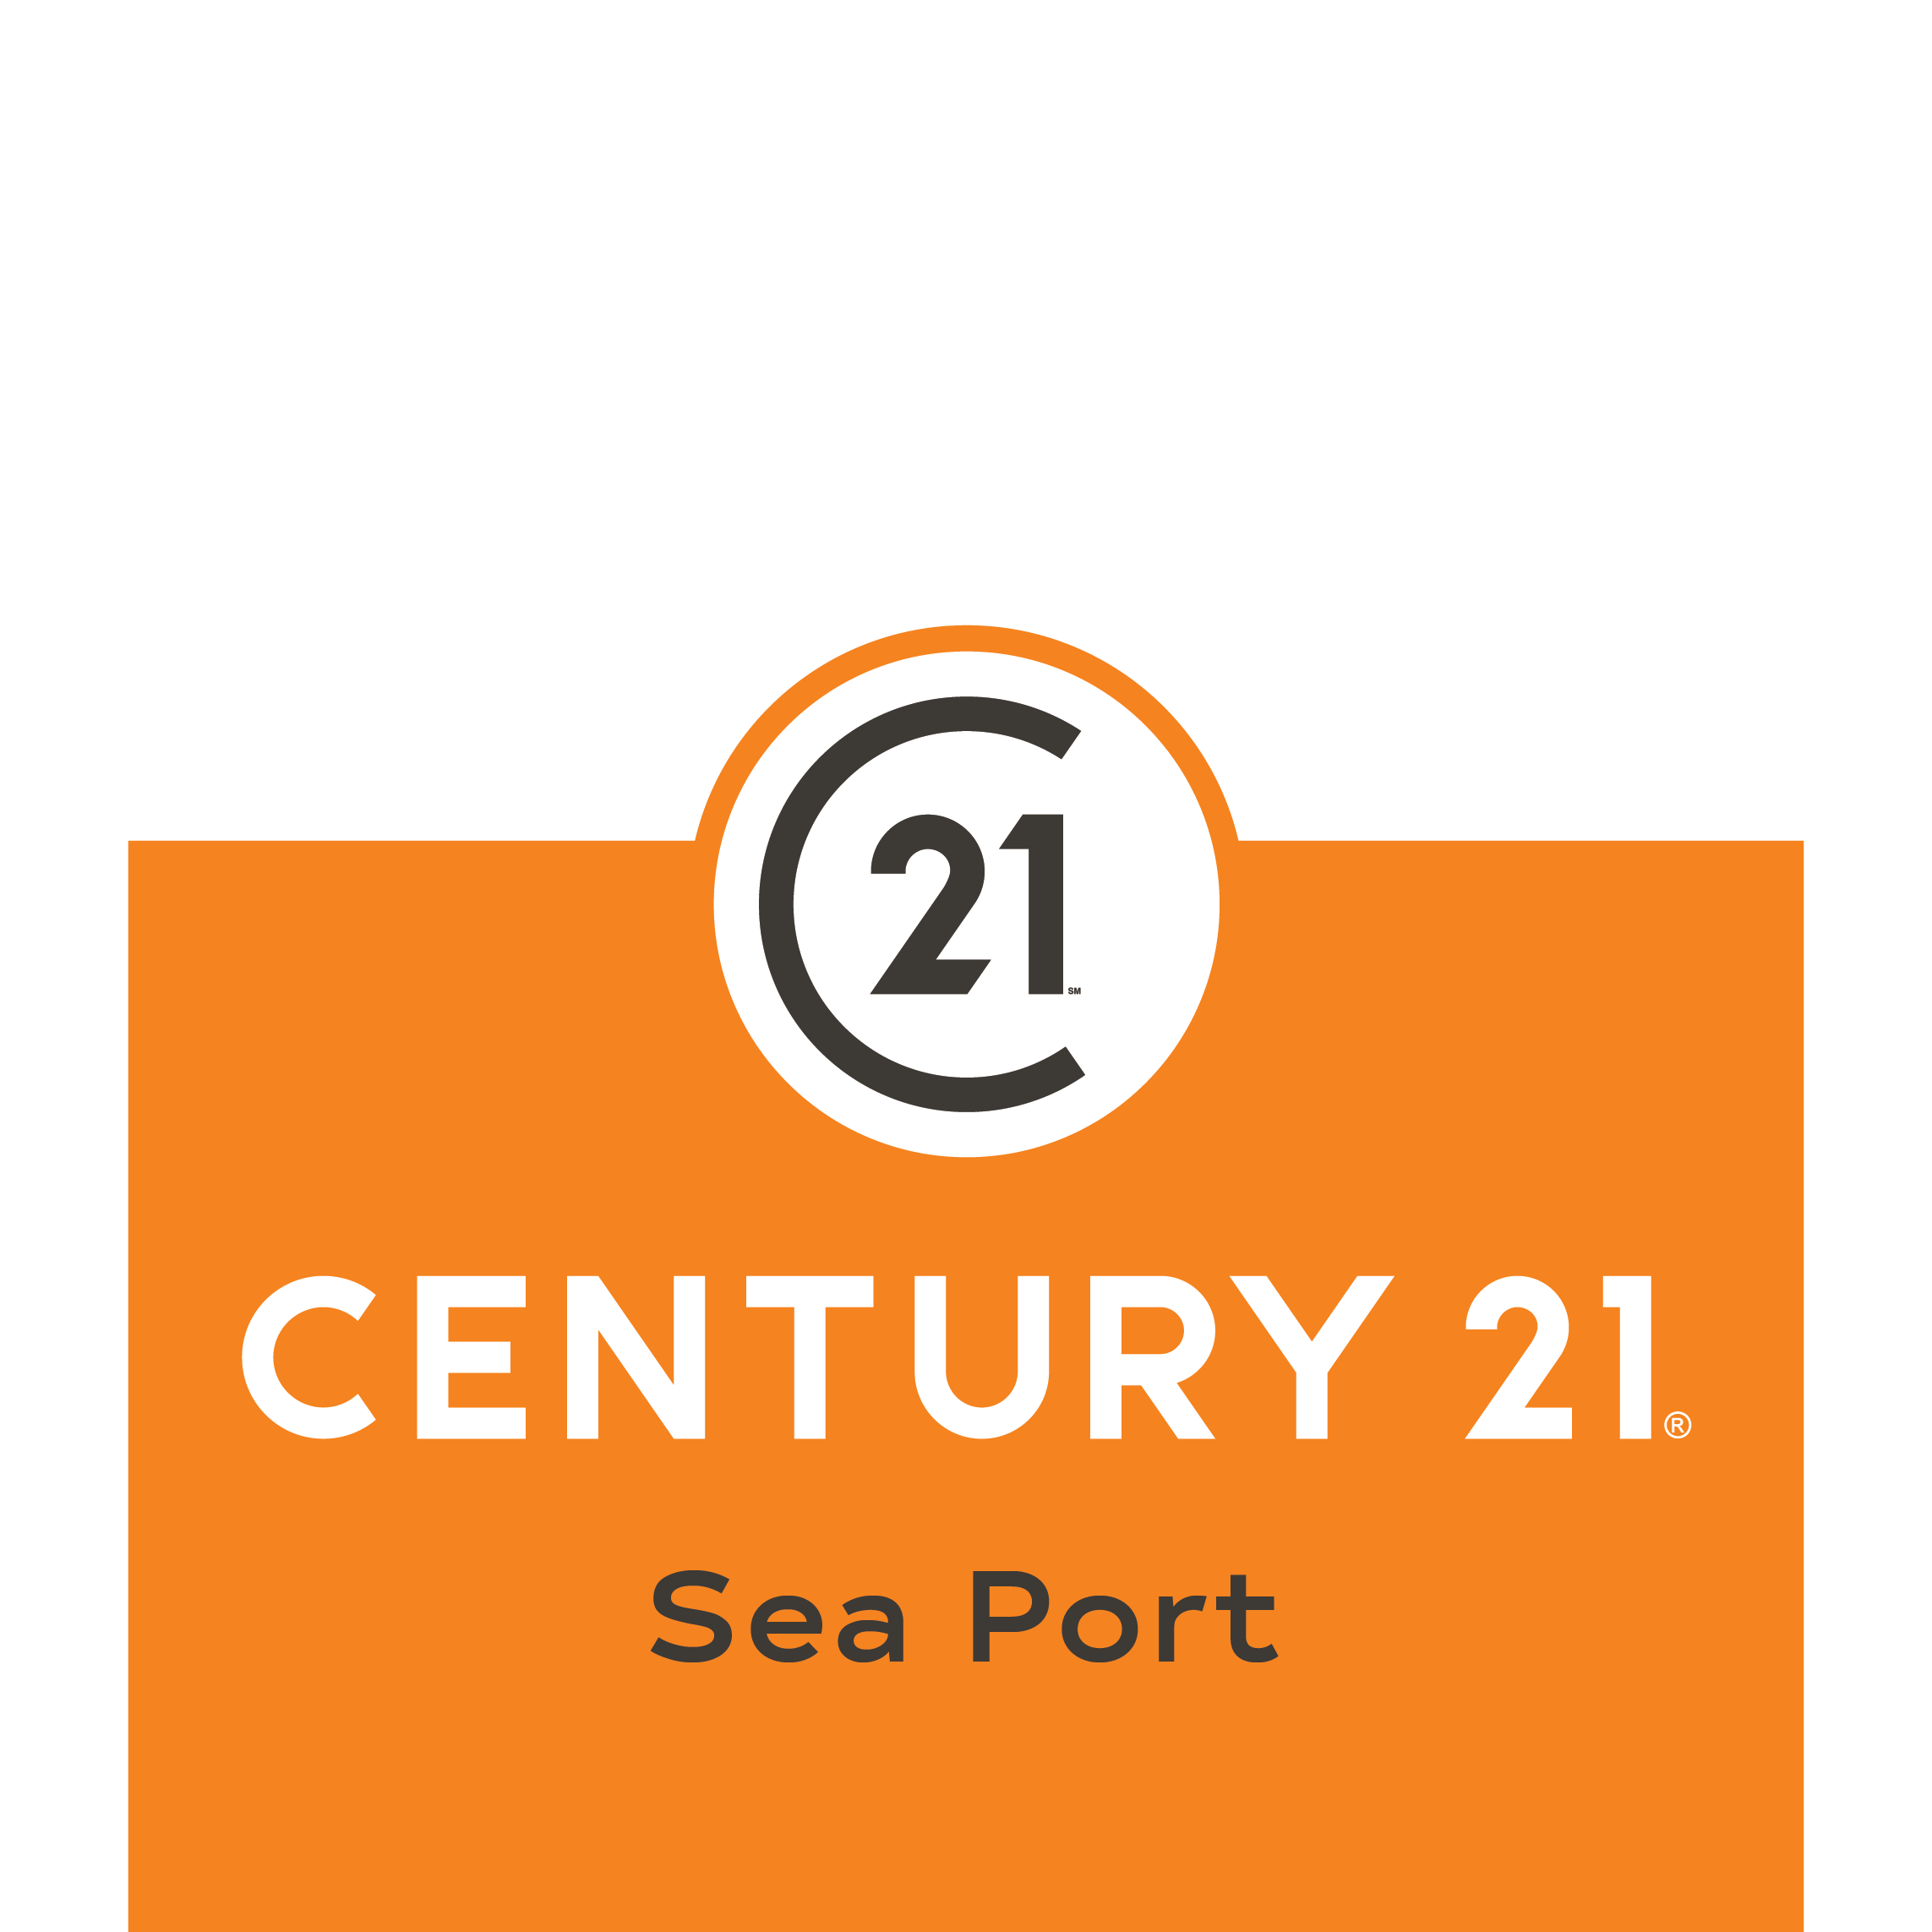 Century 21 Sea Port